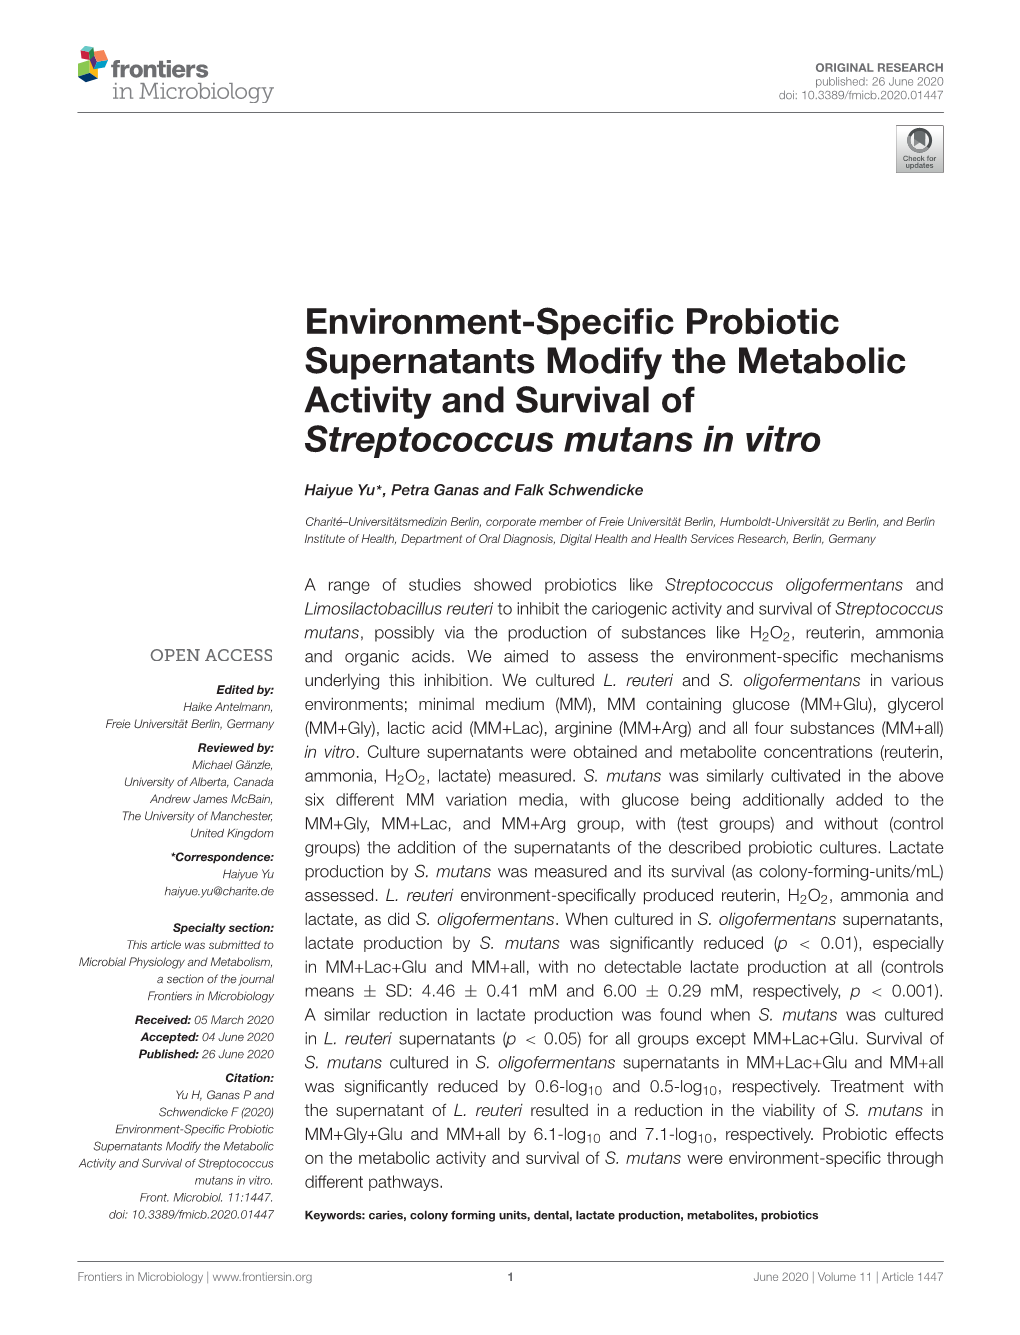 Environment-Specific Probiotic Supernatants Modify The